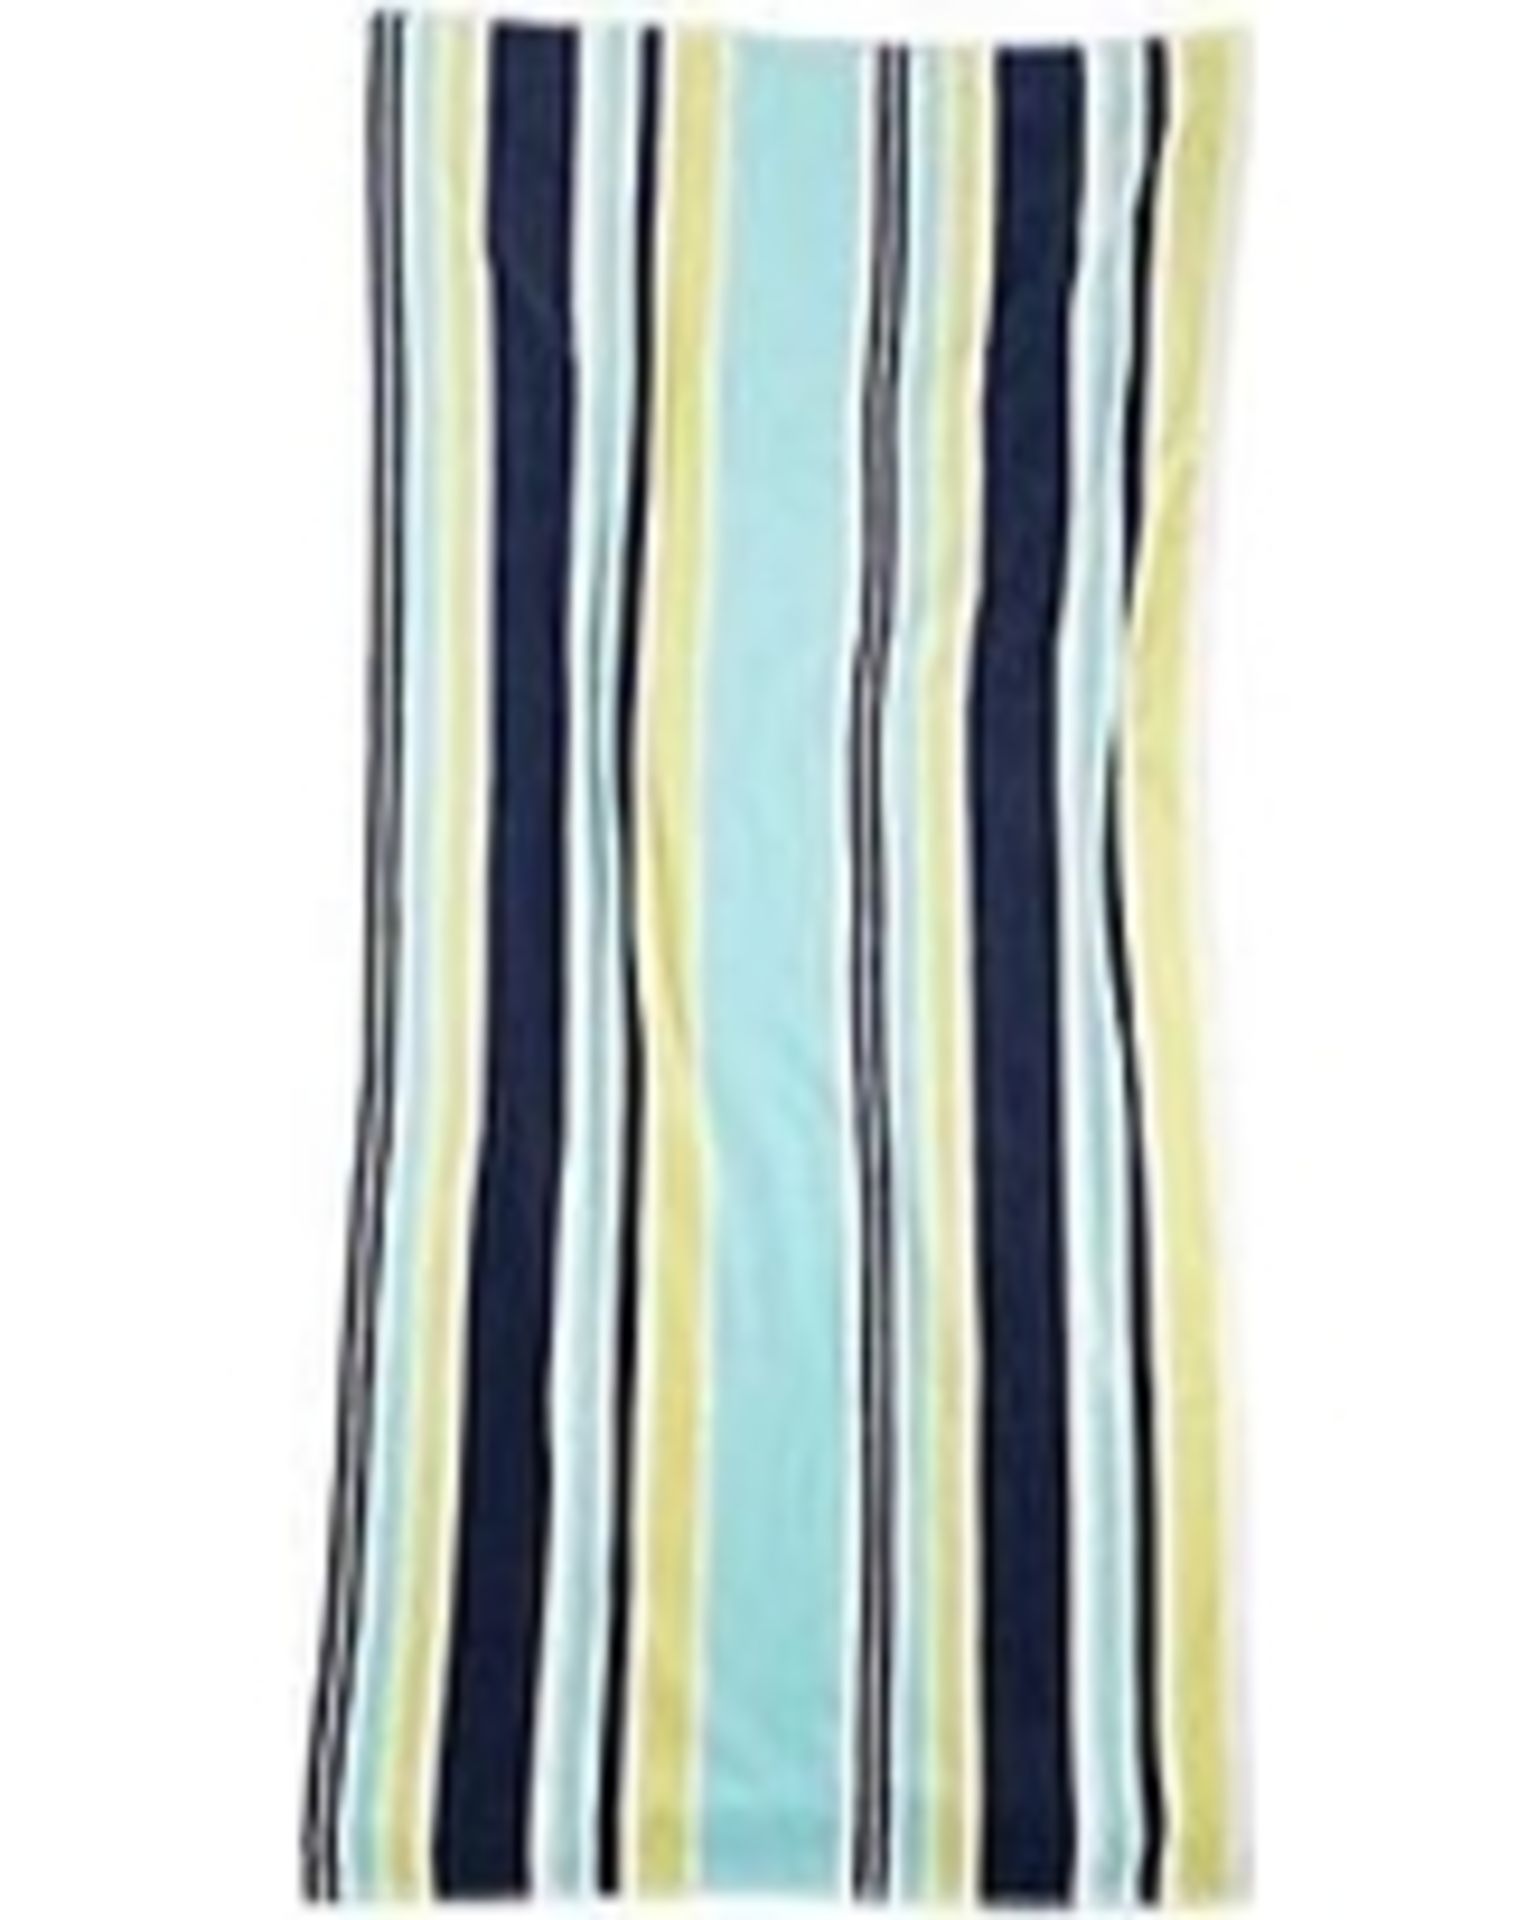 V *TRADE QTY* Grade A Coloured striped beach towel - image colour varies slightly X 6 YOUR BID PRICE